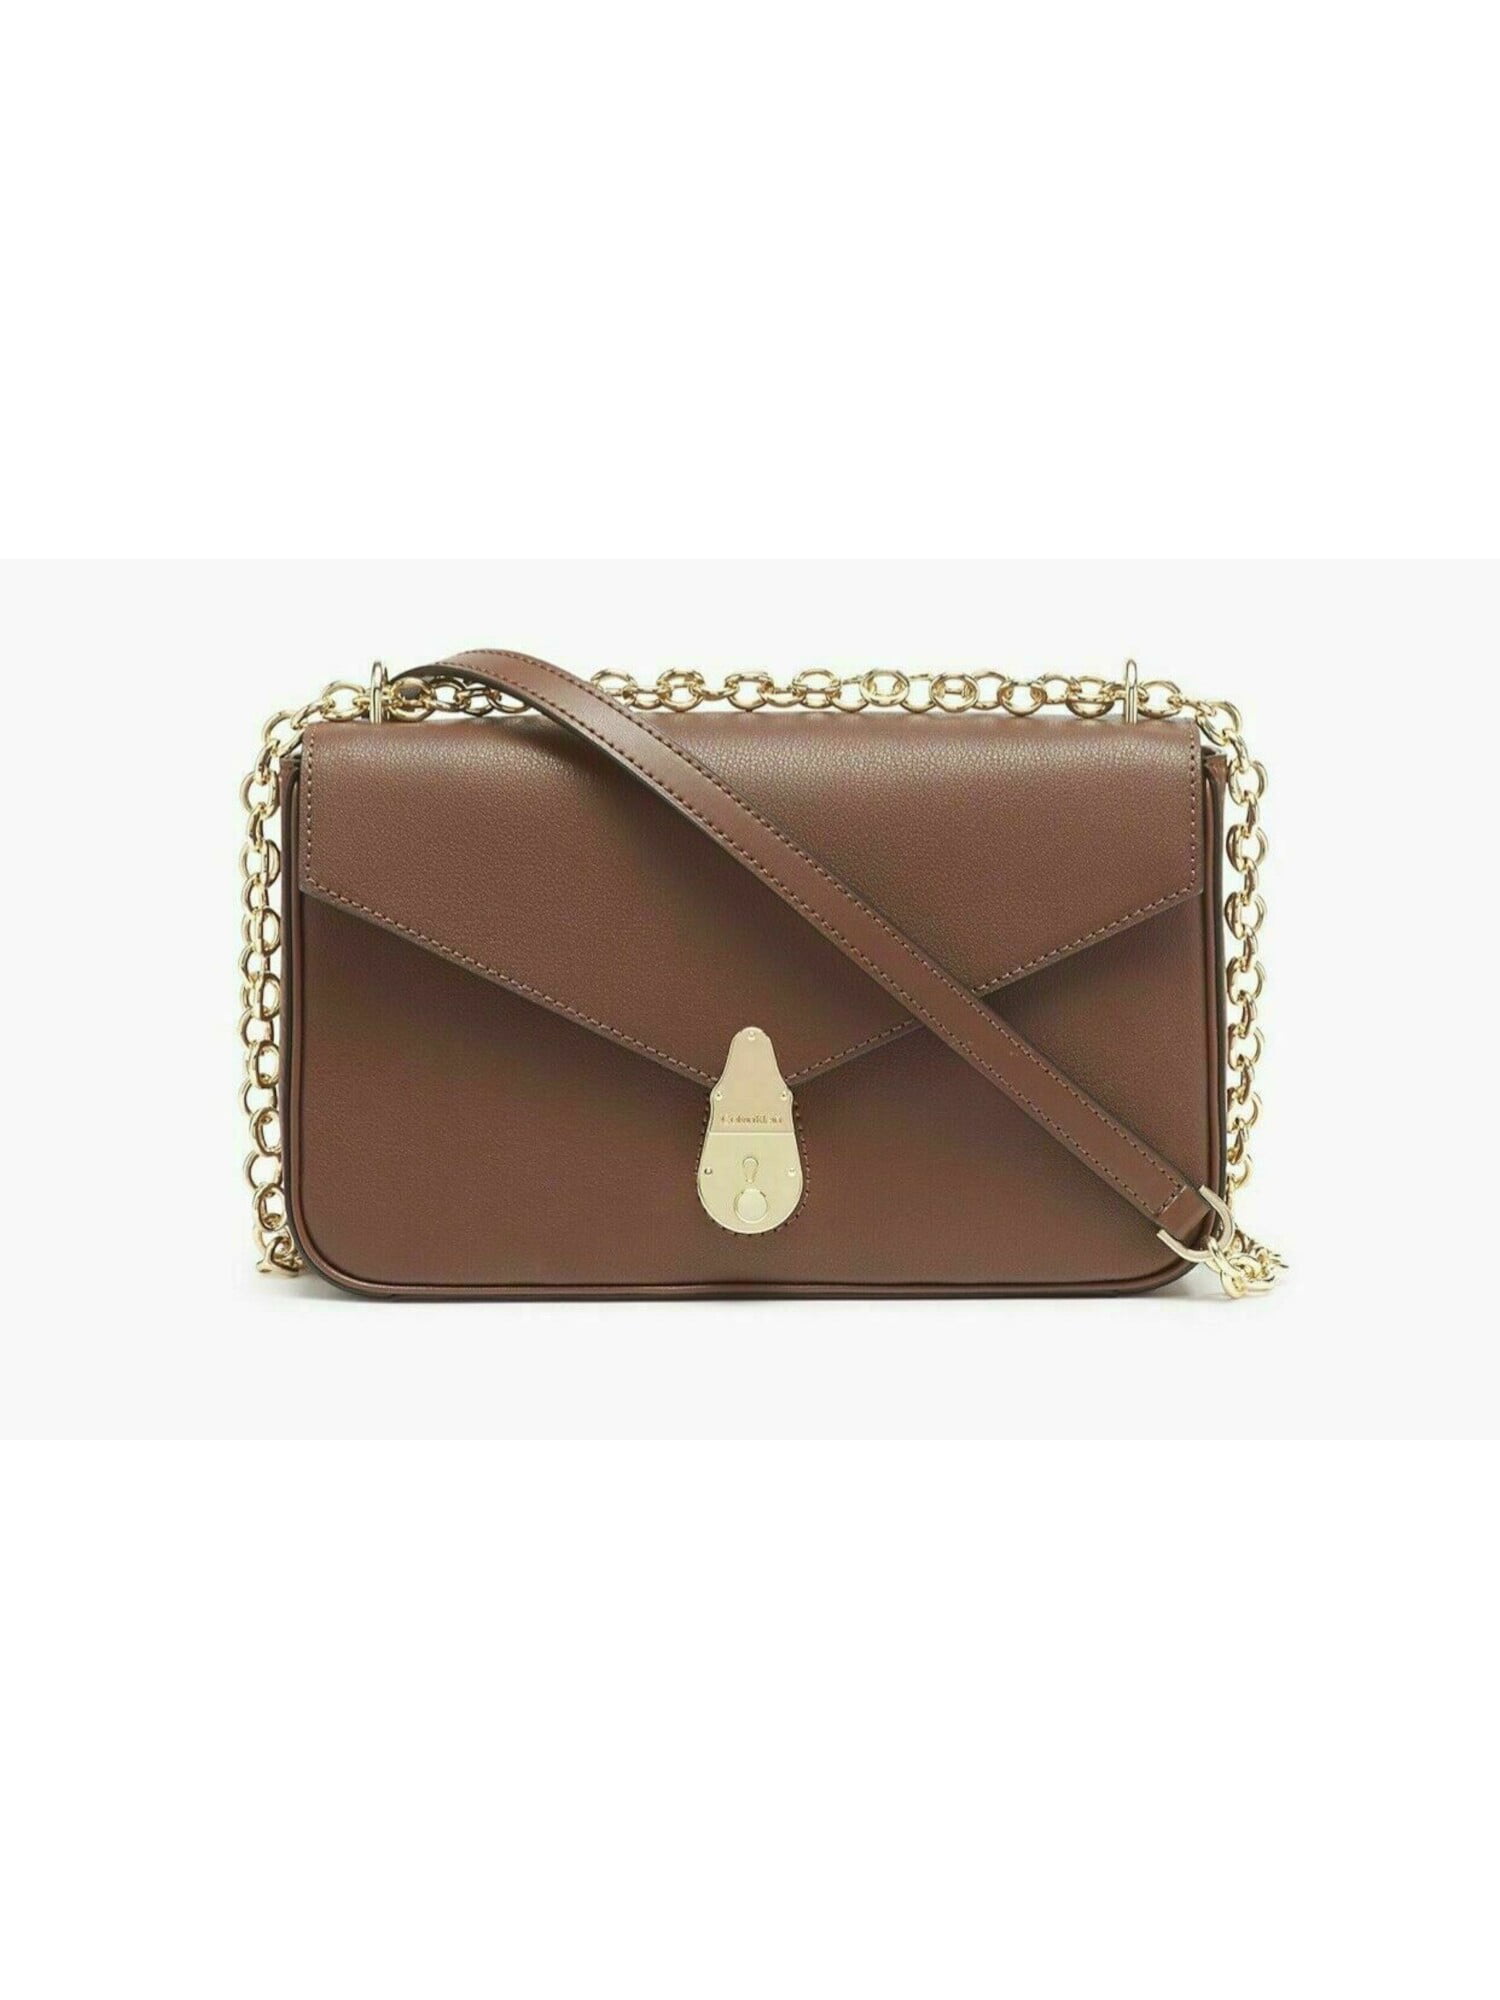 CALVIN KLEIN Women's Brown Leather Chain Strap Crossbody Handbag Purse -  